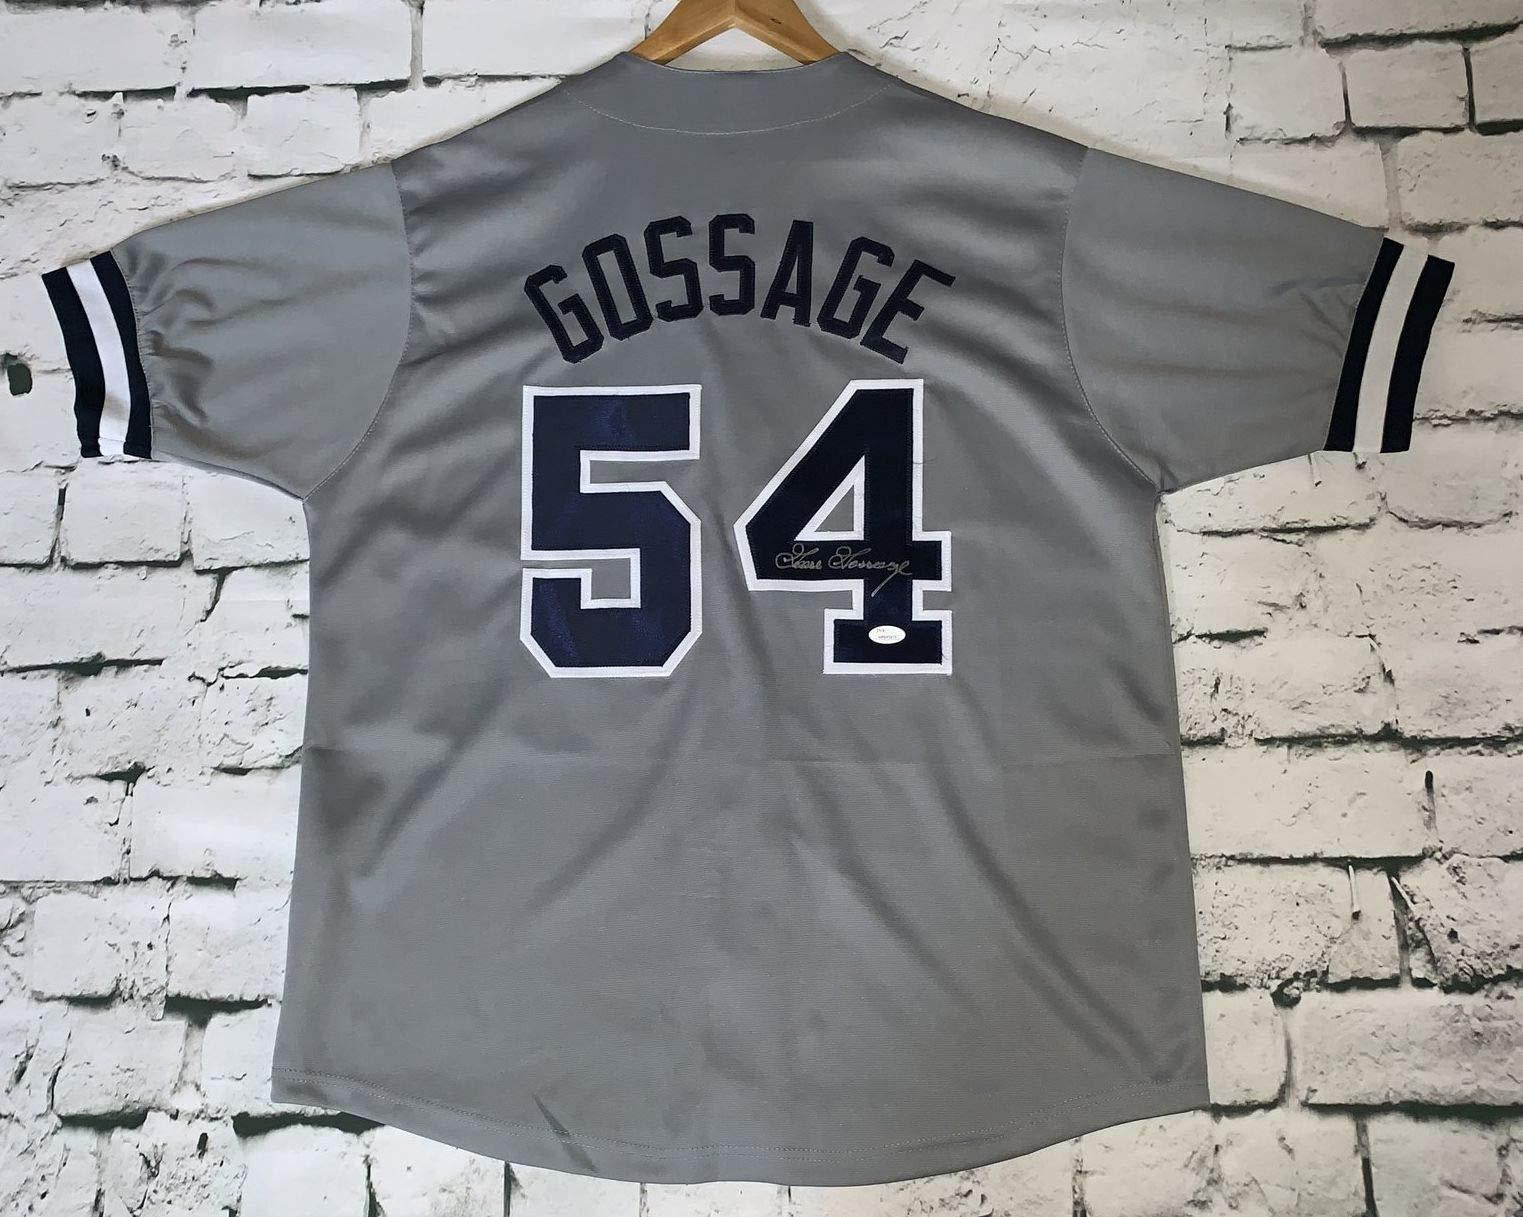 goose gossage jersey